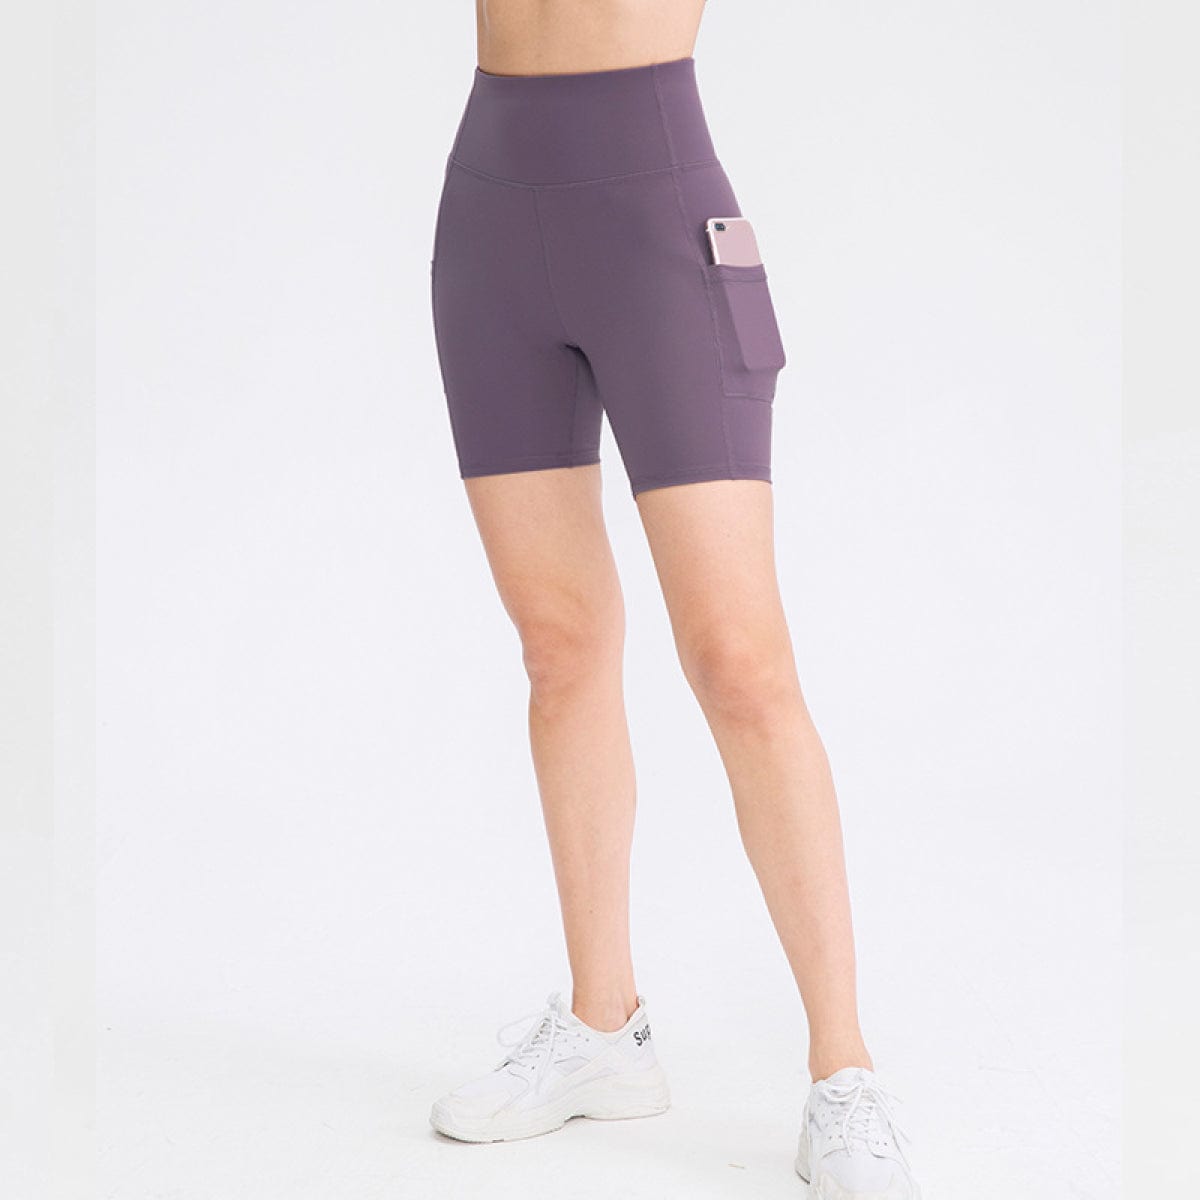 Allrj High Waist Active Shorts With Pockets Purple